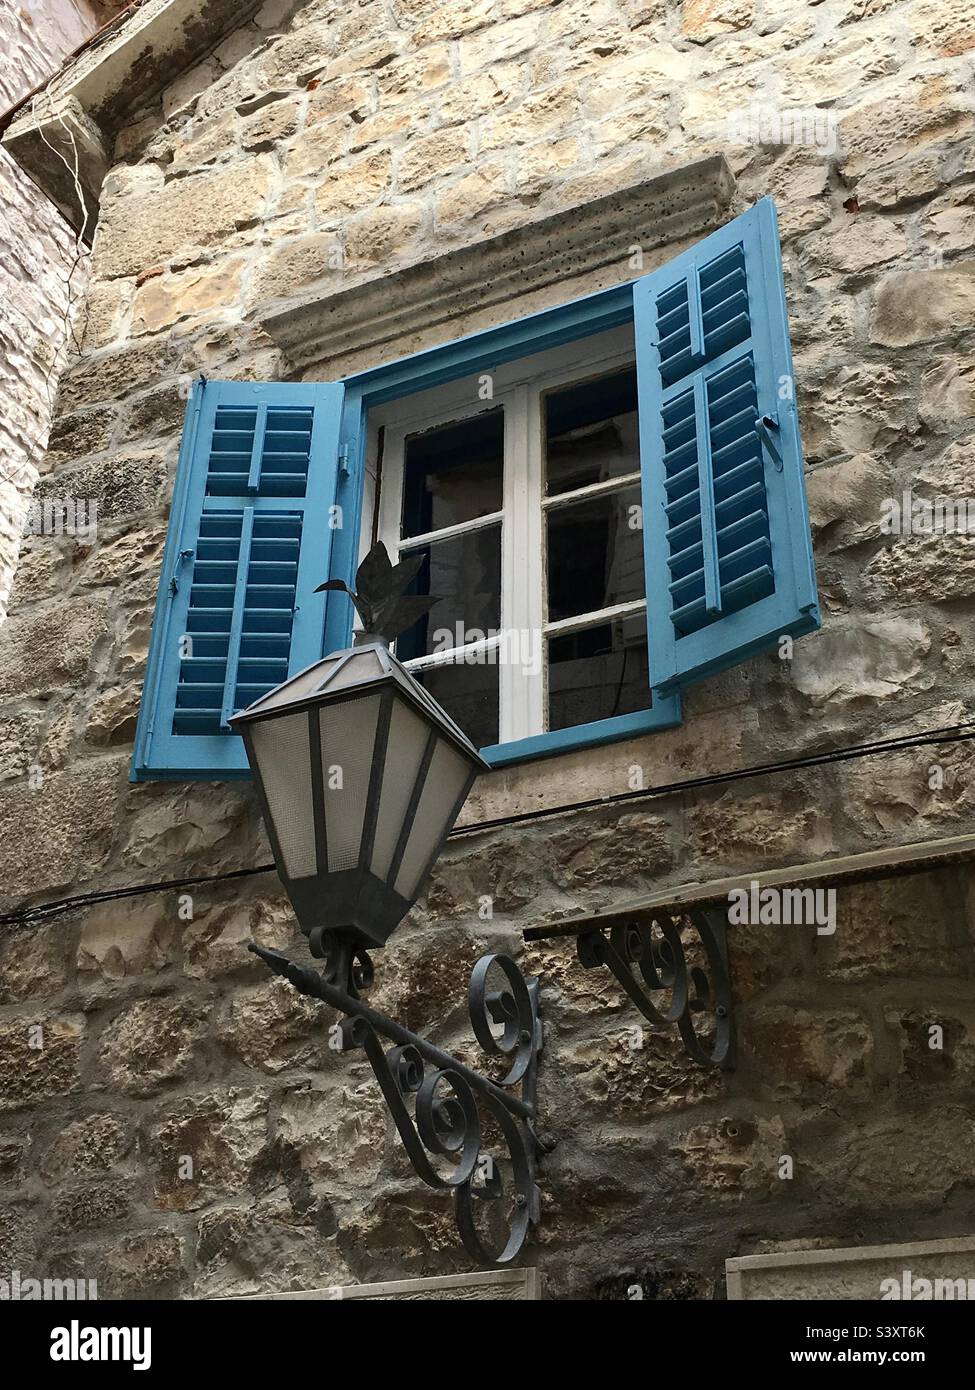 Blue shuttered window with street lamp, Trogir, Croatia. Stock Photo